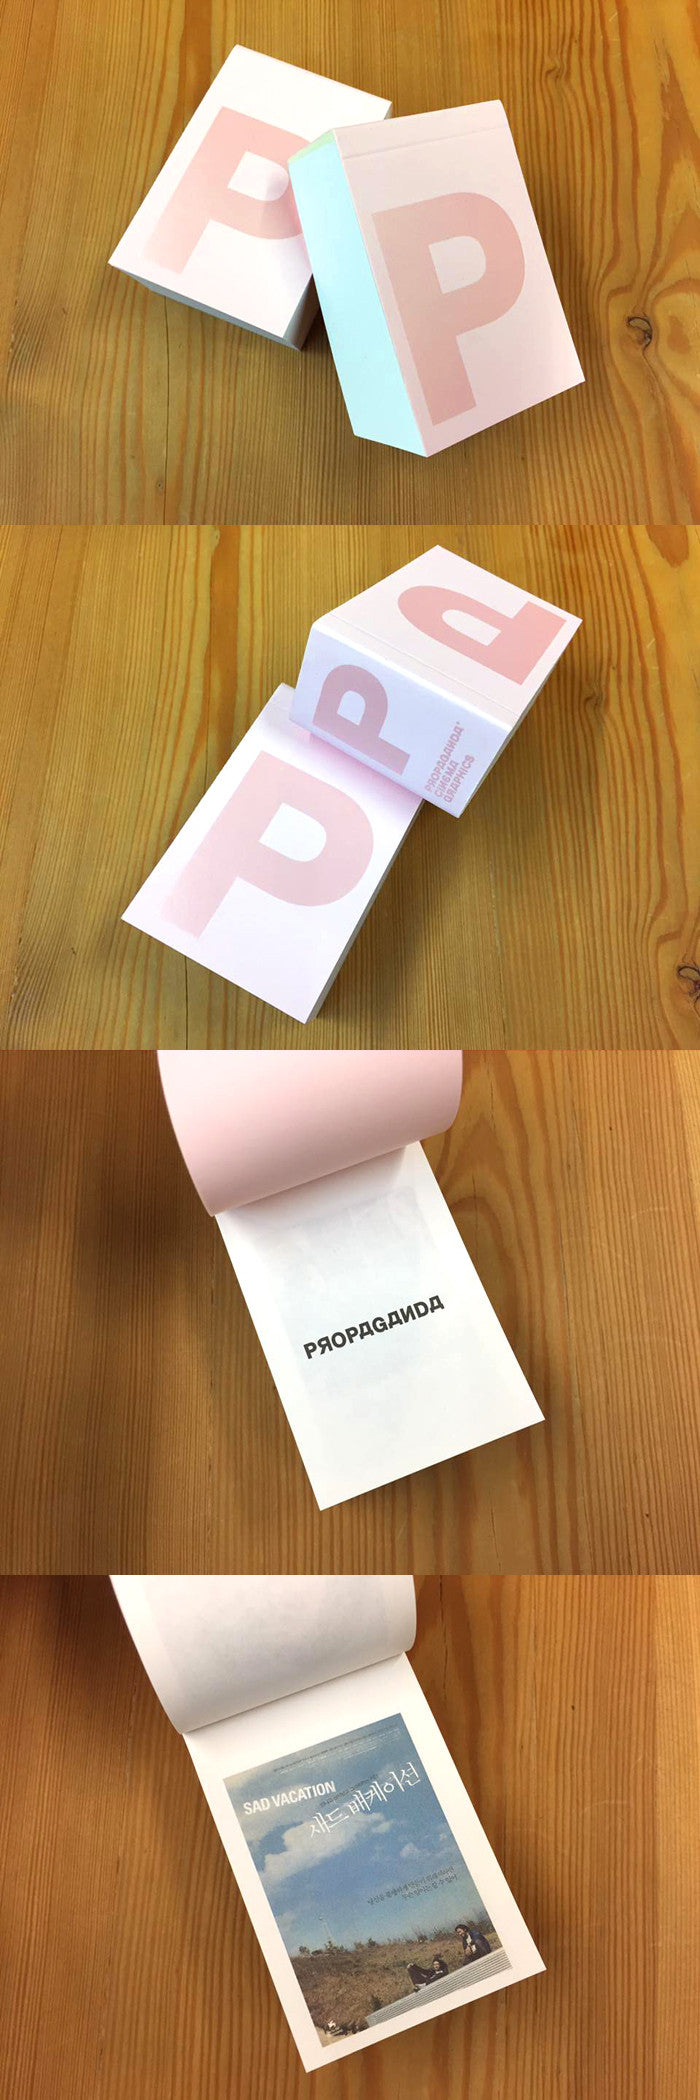 Design Book: PP (Propaganda Poster)